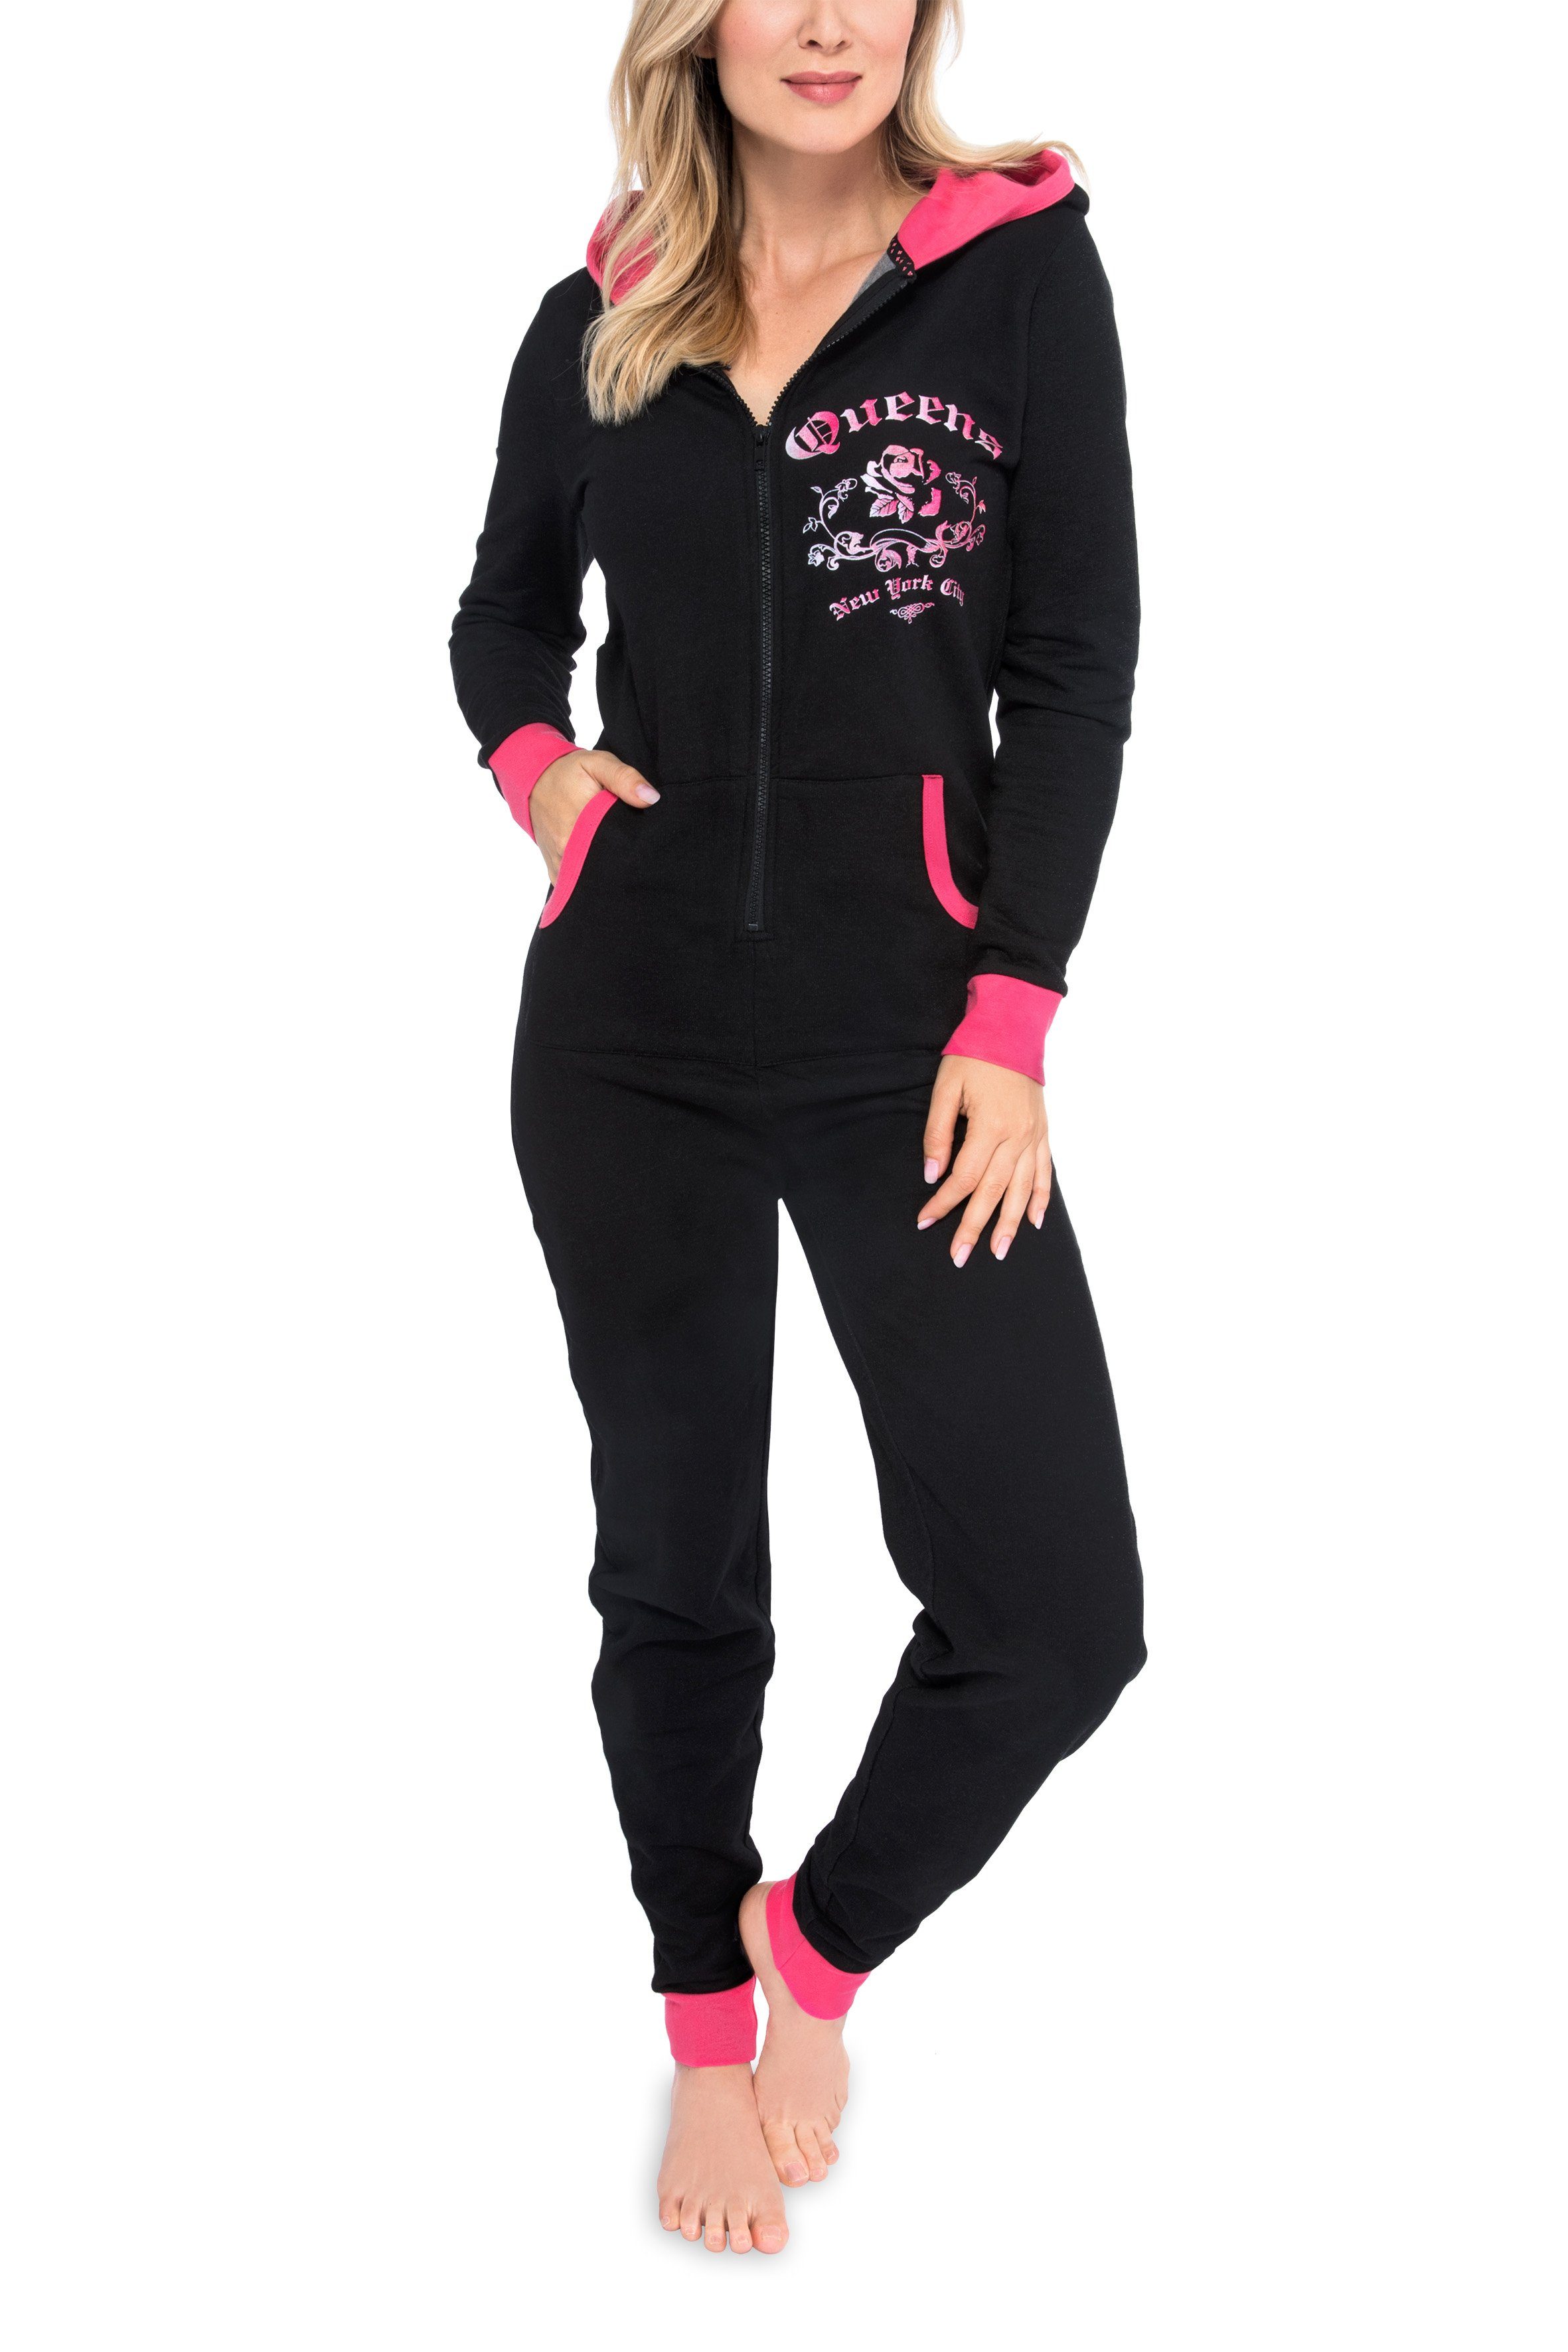 maluuna Overall maluuna hochwertiger Onesie Sweater-Qualität Hausanzug Jogger in Overall Jumpsuit Damen